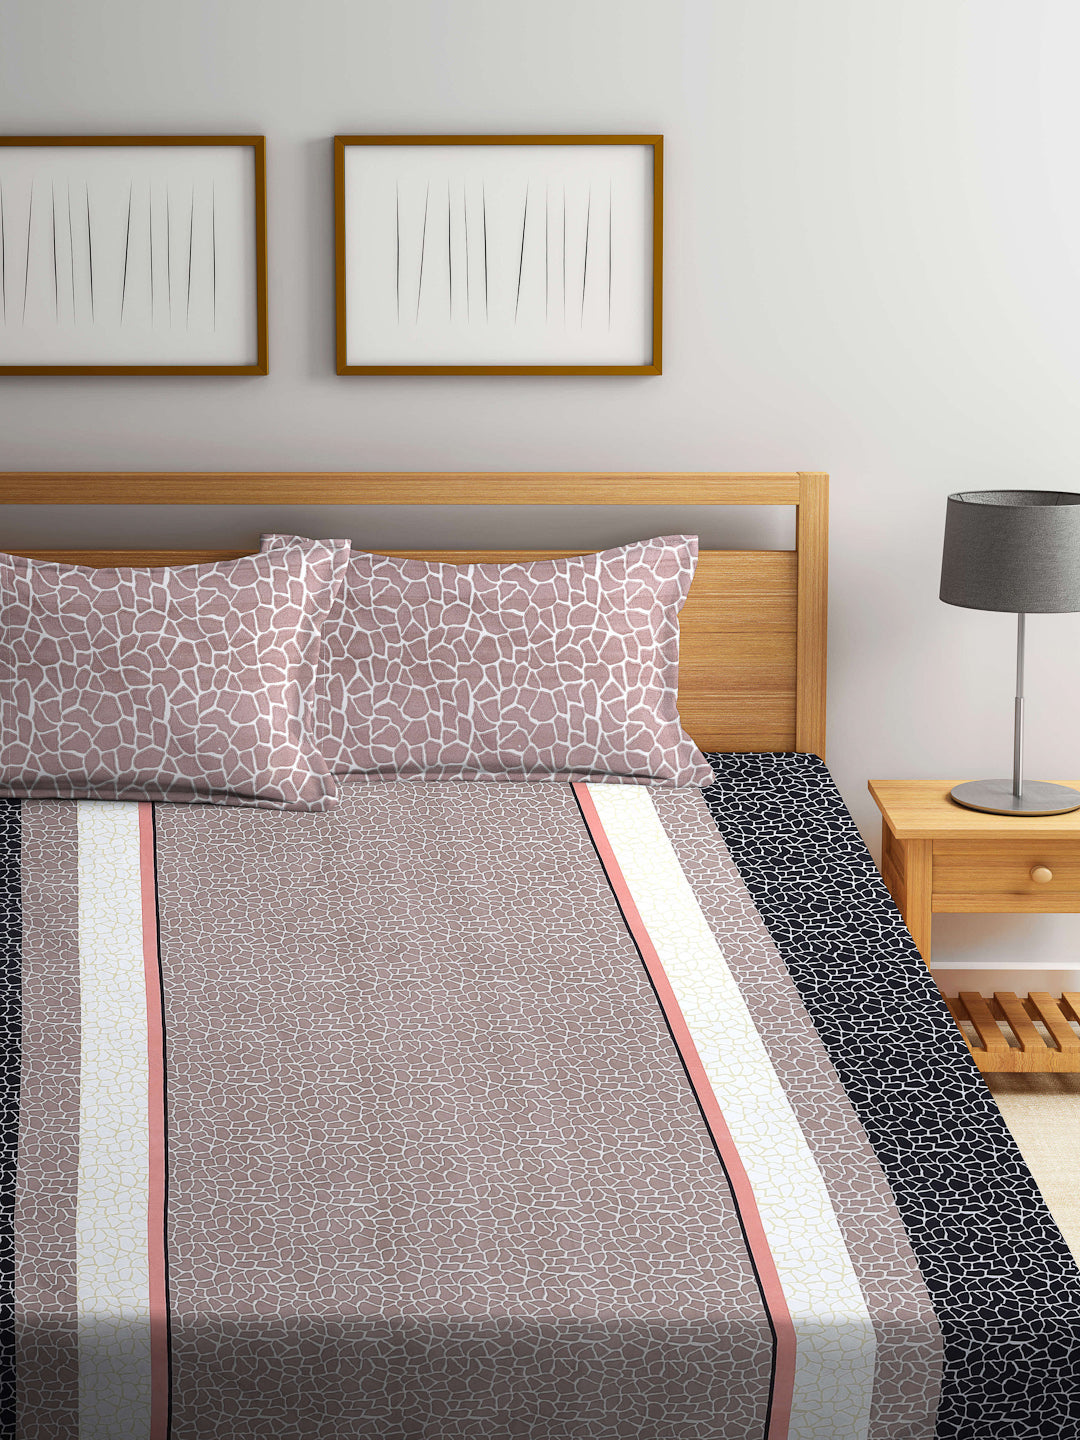 Arrabi Multi Stripes TC Cotton Blend King Size Bedsheet with 2 Pillow Covers (250 x 220 cm)